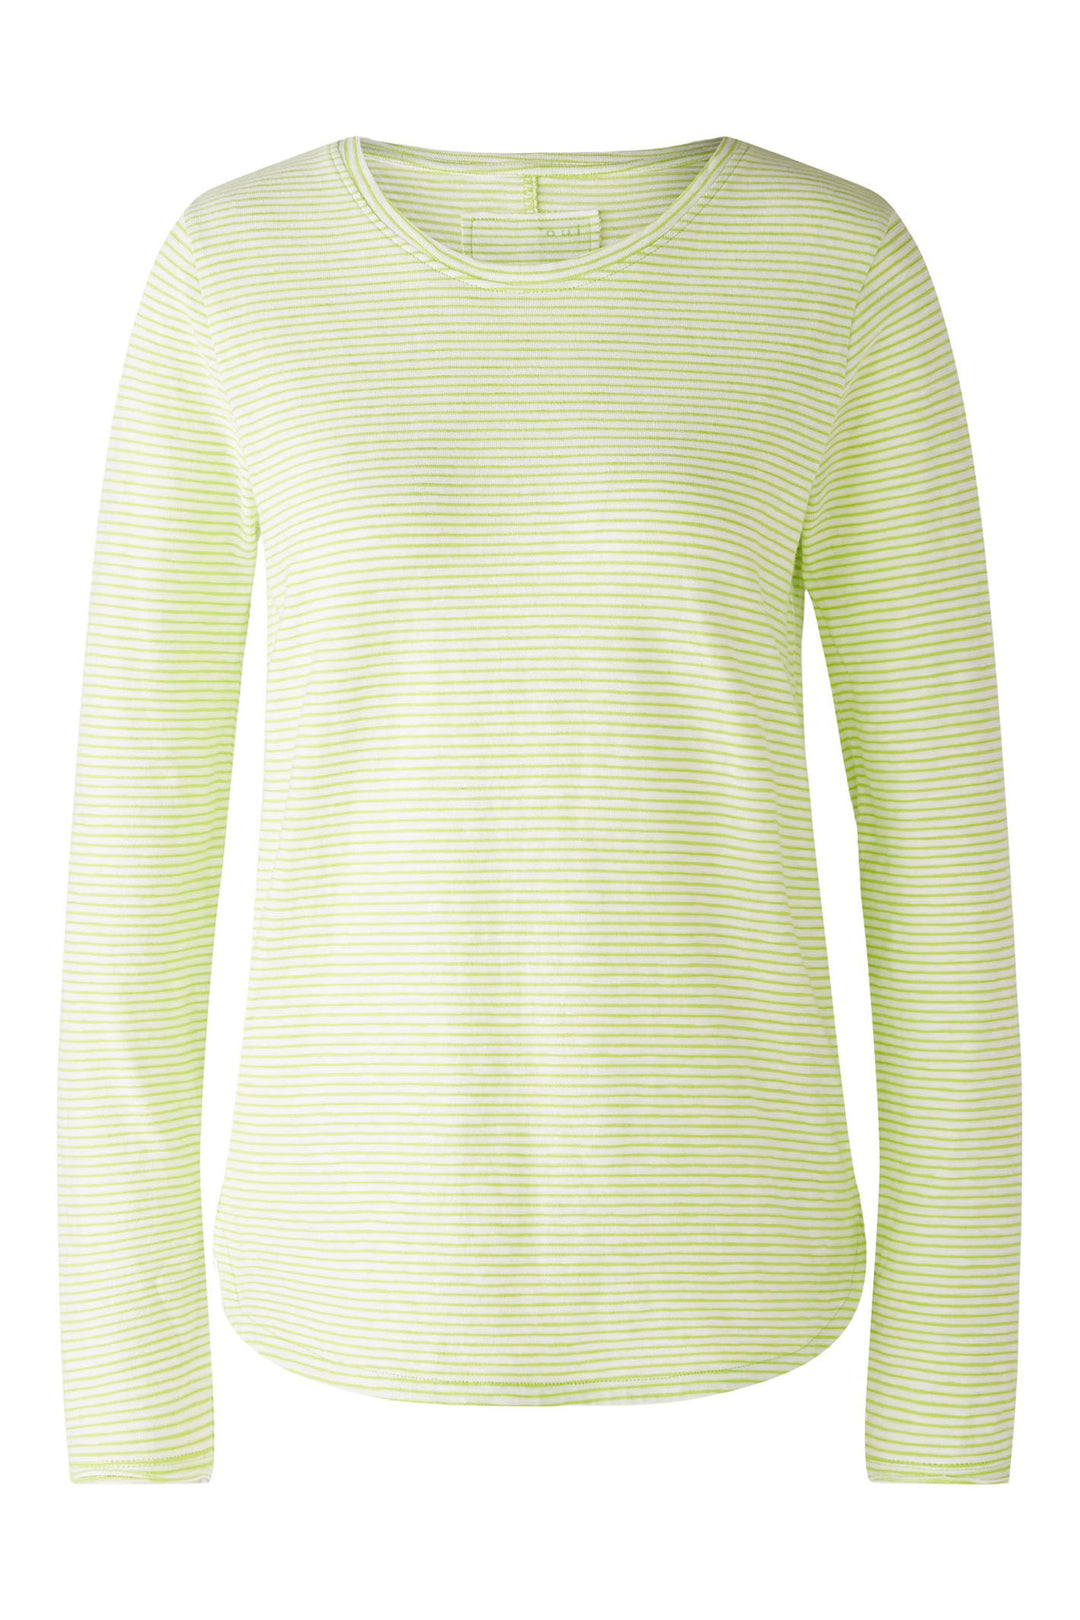 Oui 86752 Green White Stripe Breton Style Long Sleeve Top - Olivia Grace Fashion